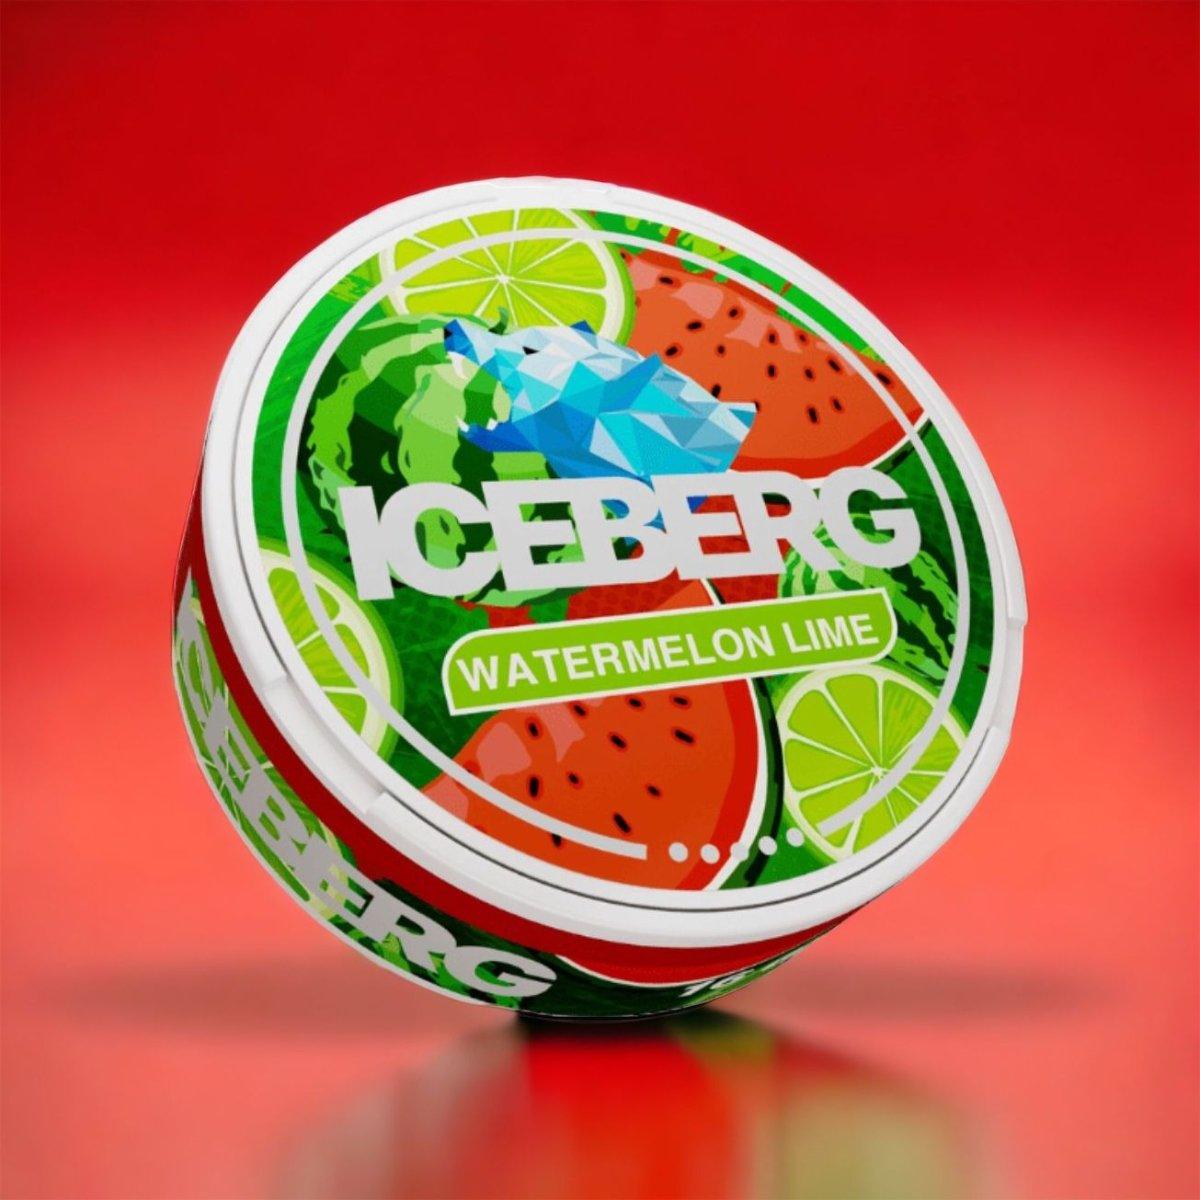 Iceberg Nicopods - 15% - Box of 10 - Puff N Stuff